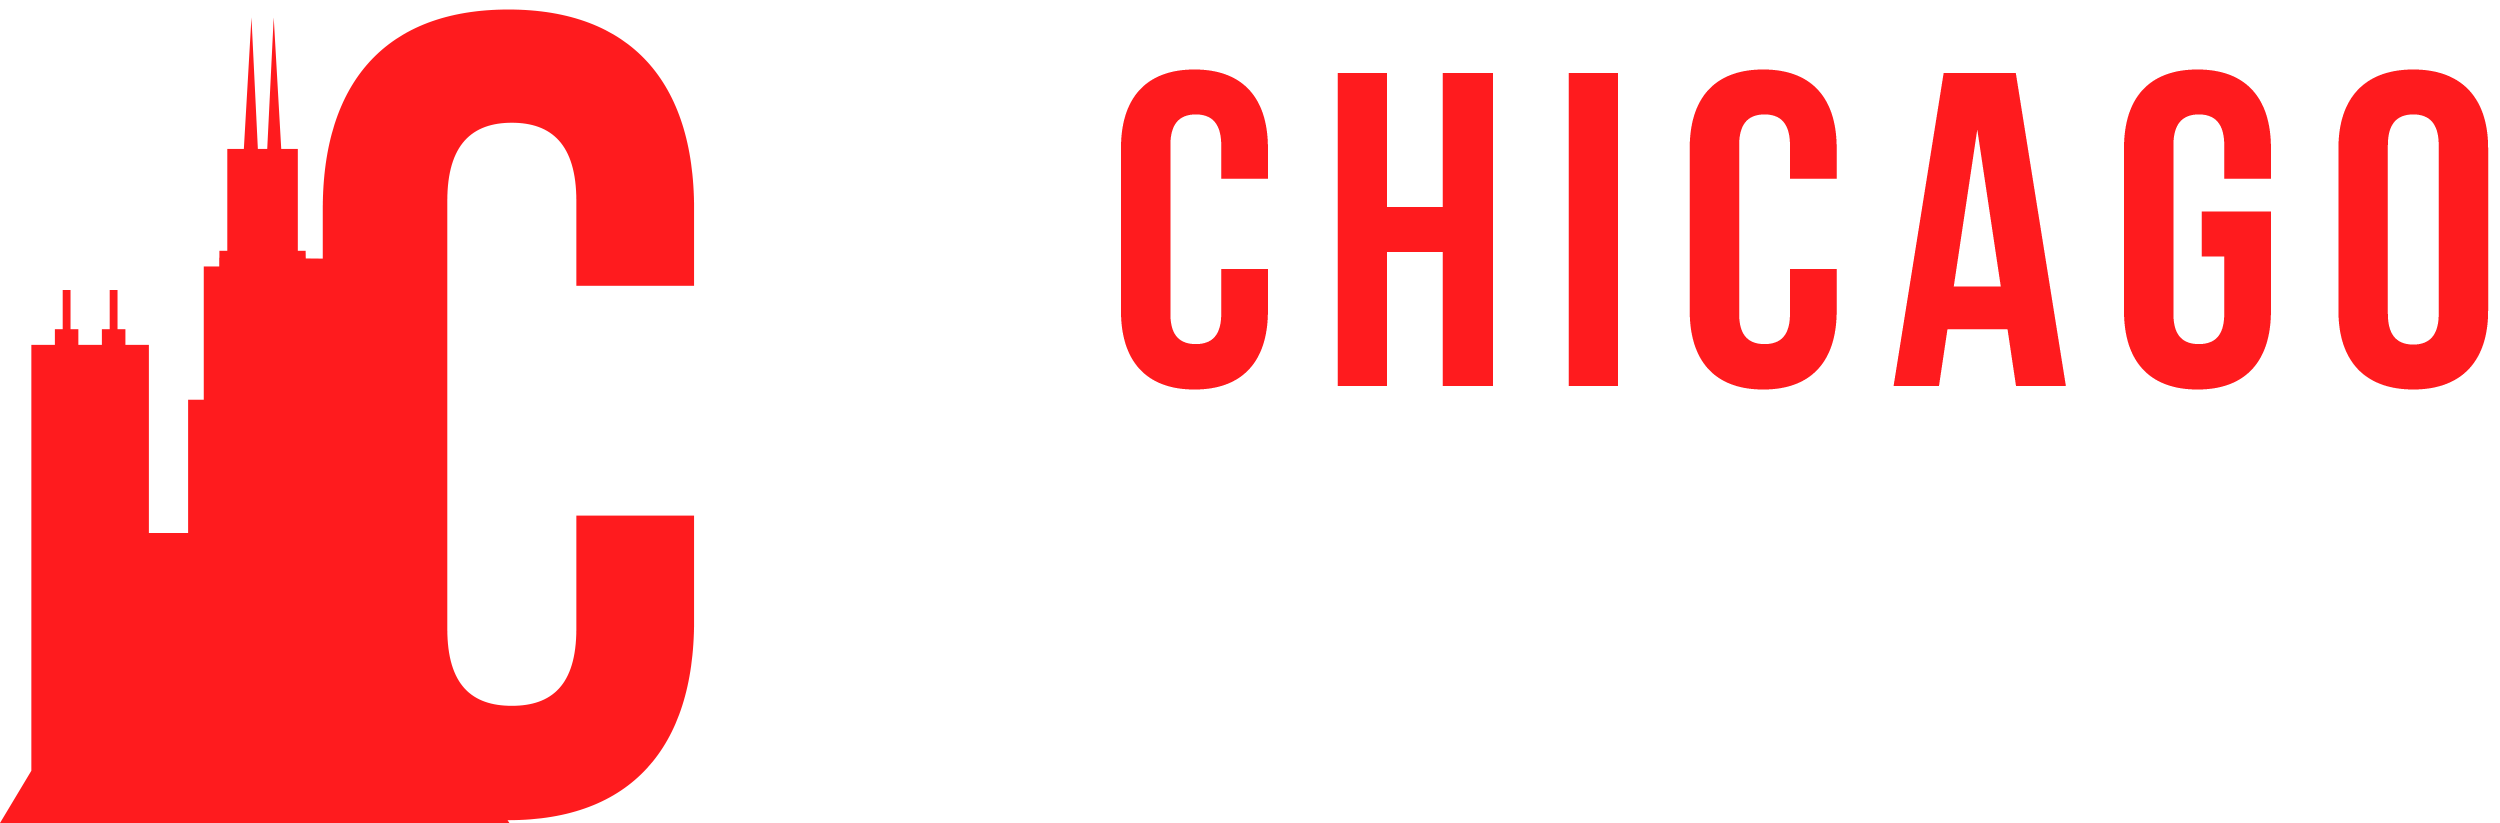 Chicago Discover